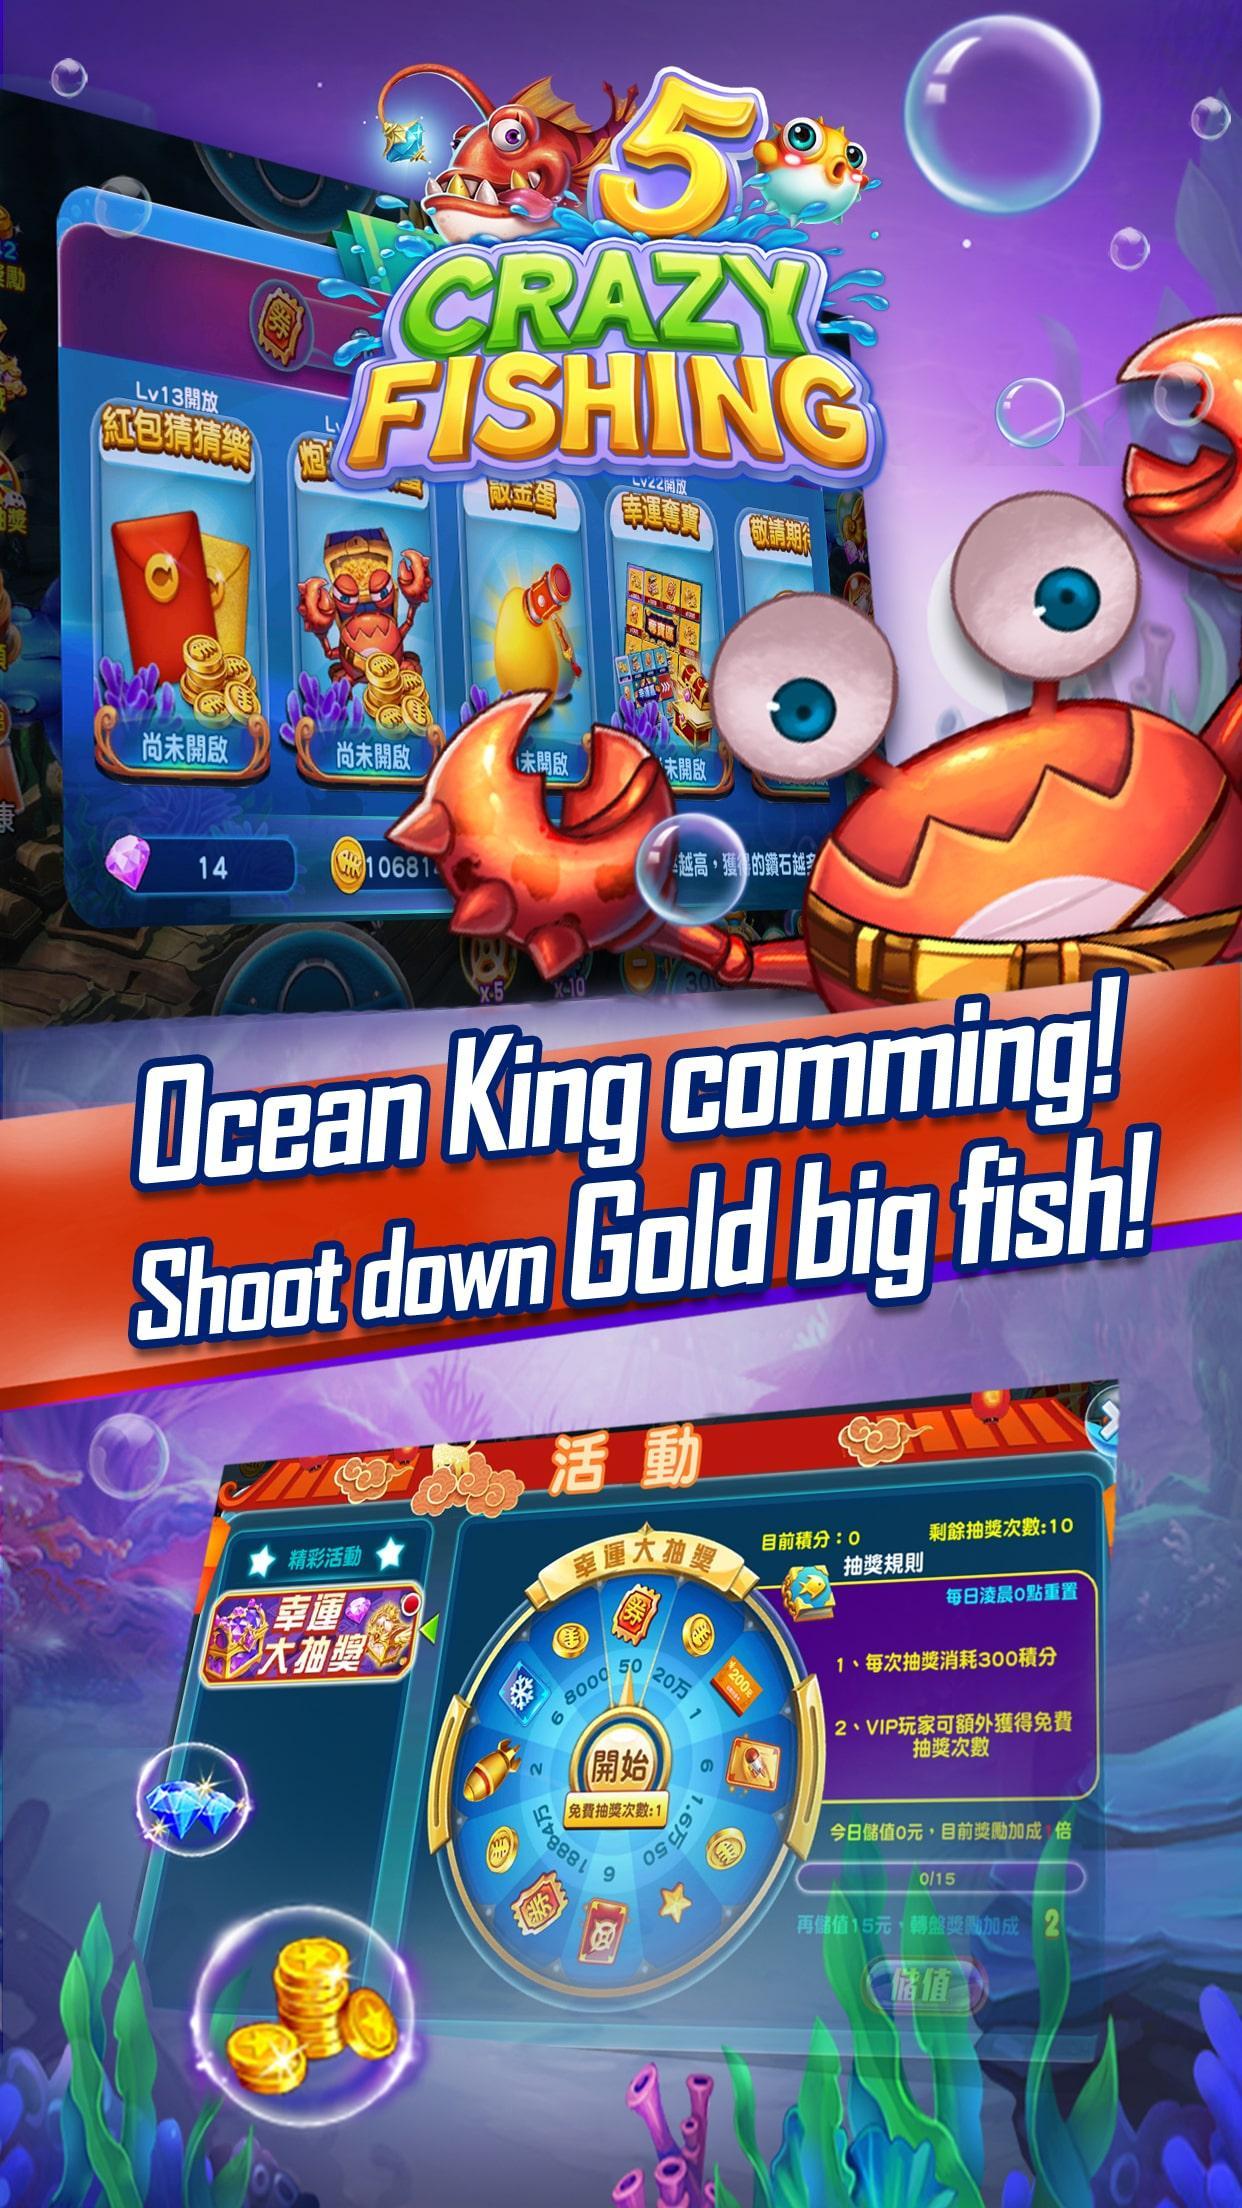 Crazyfishing 5- 2020 Arcade Fishing Game 1.0.3.10 Screenshot 1